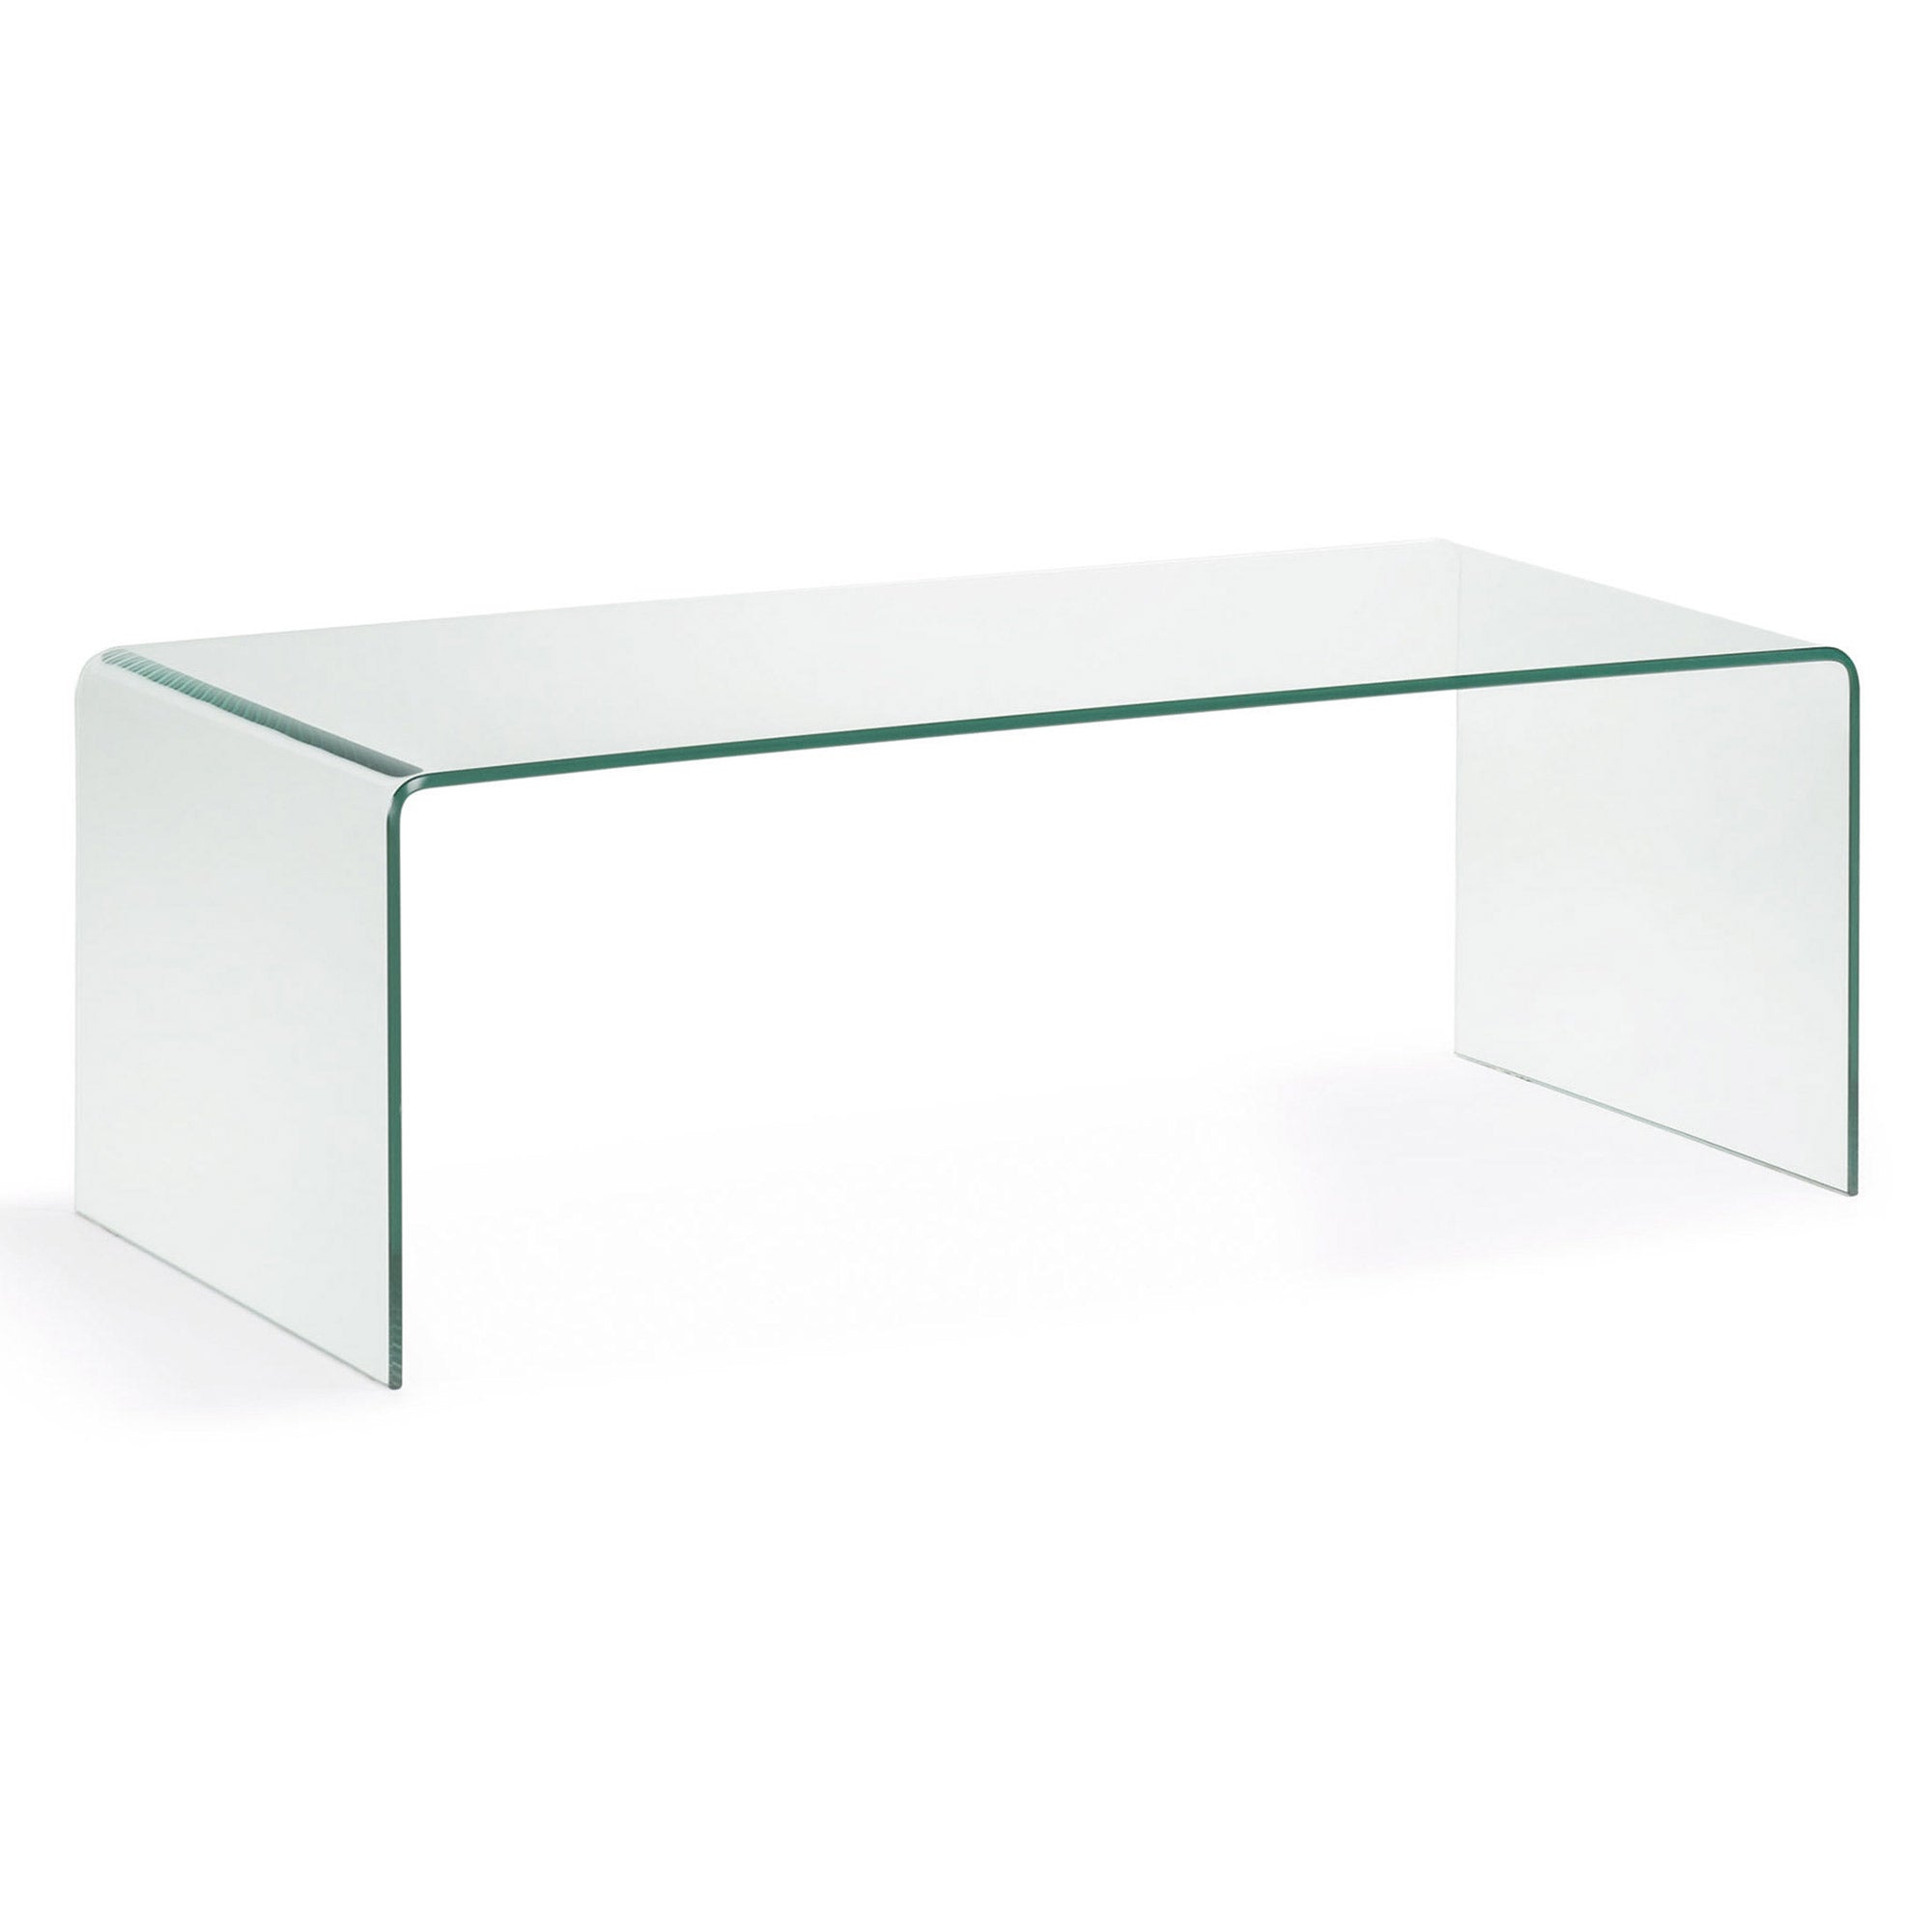 Burano glass coffee table 110 x 50 cm